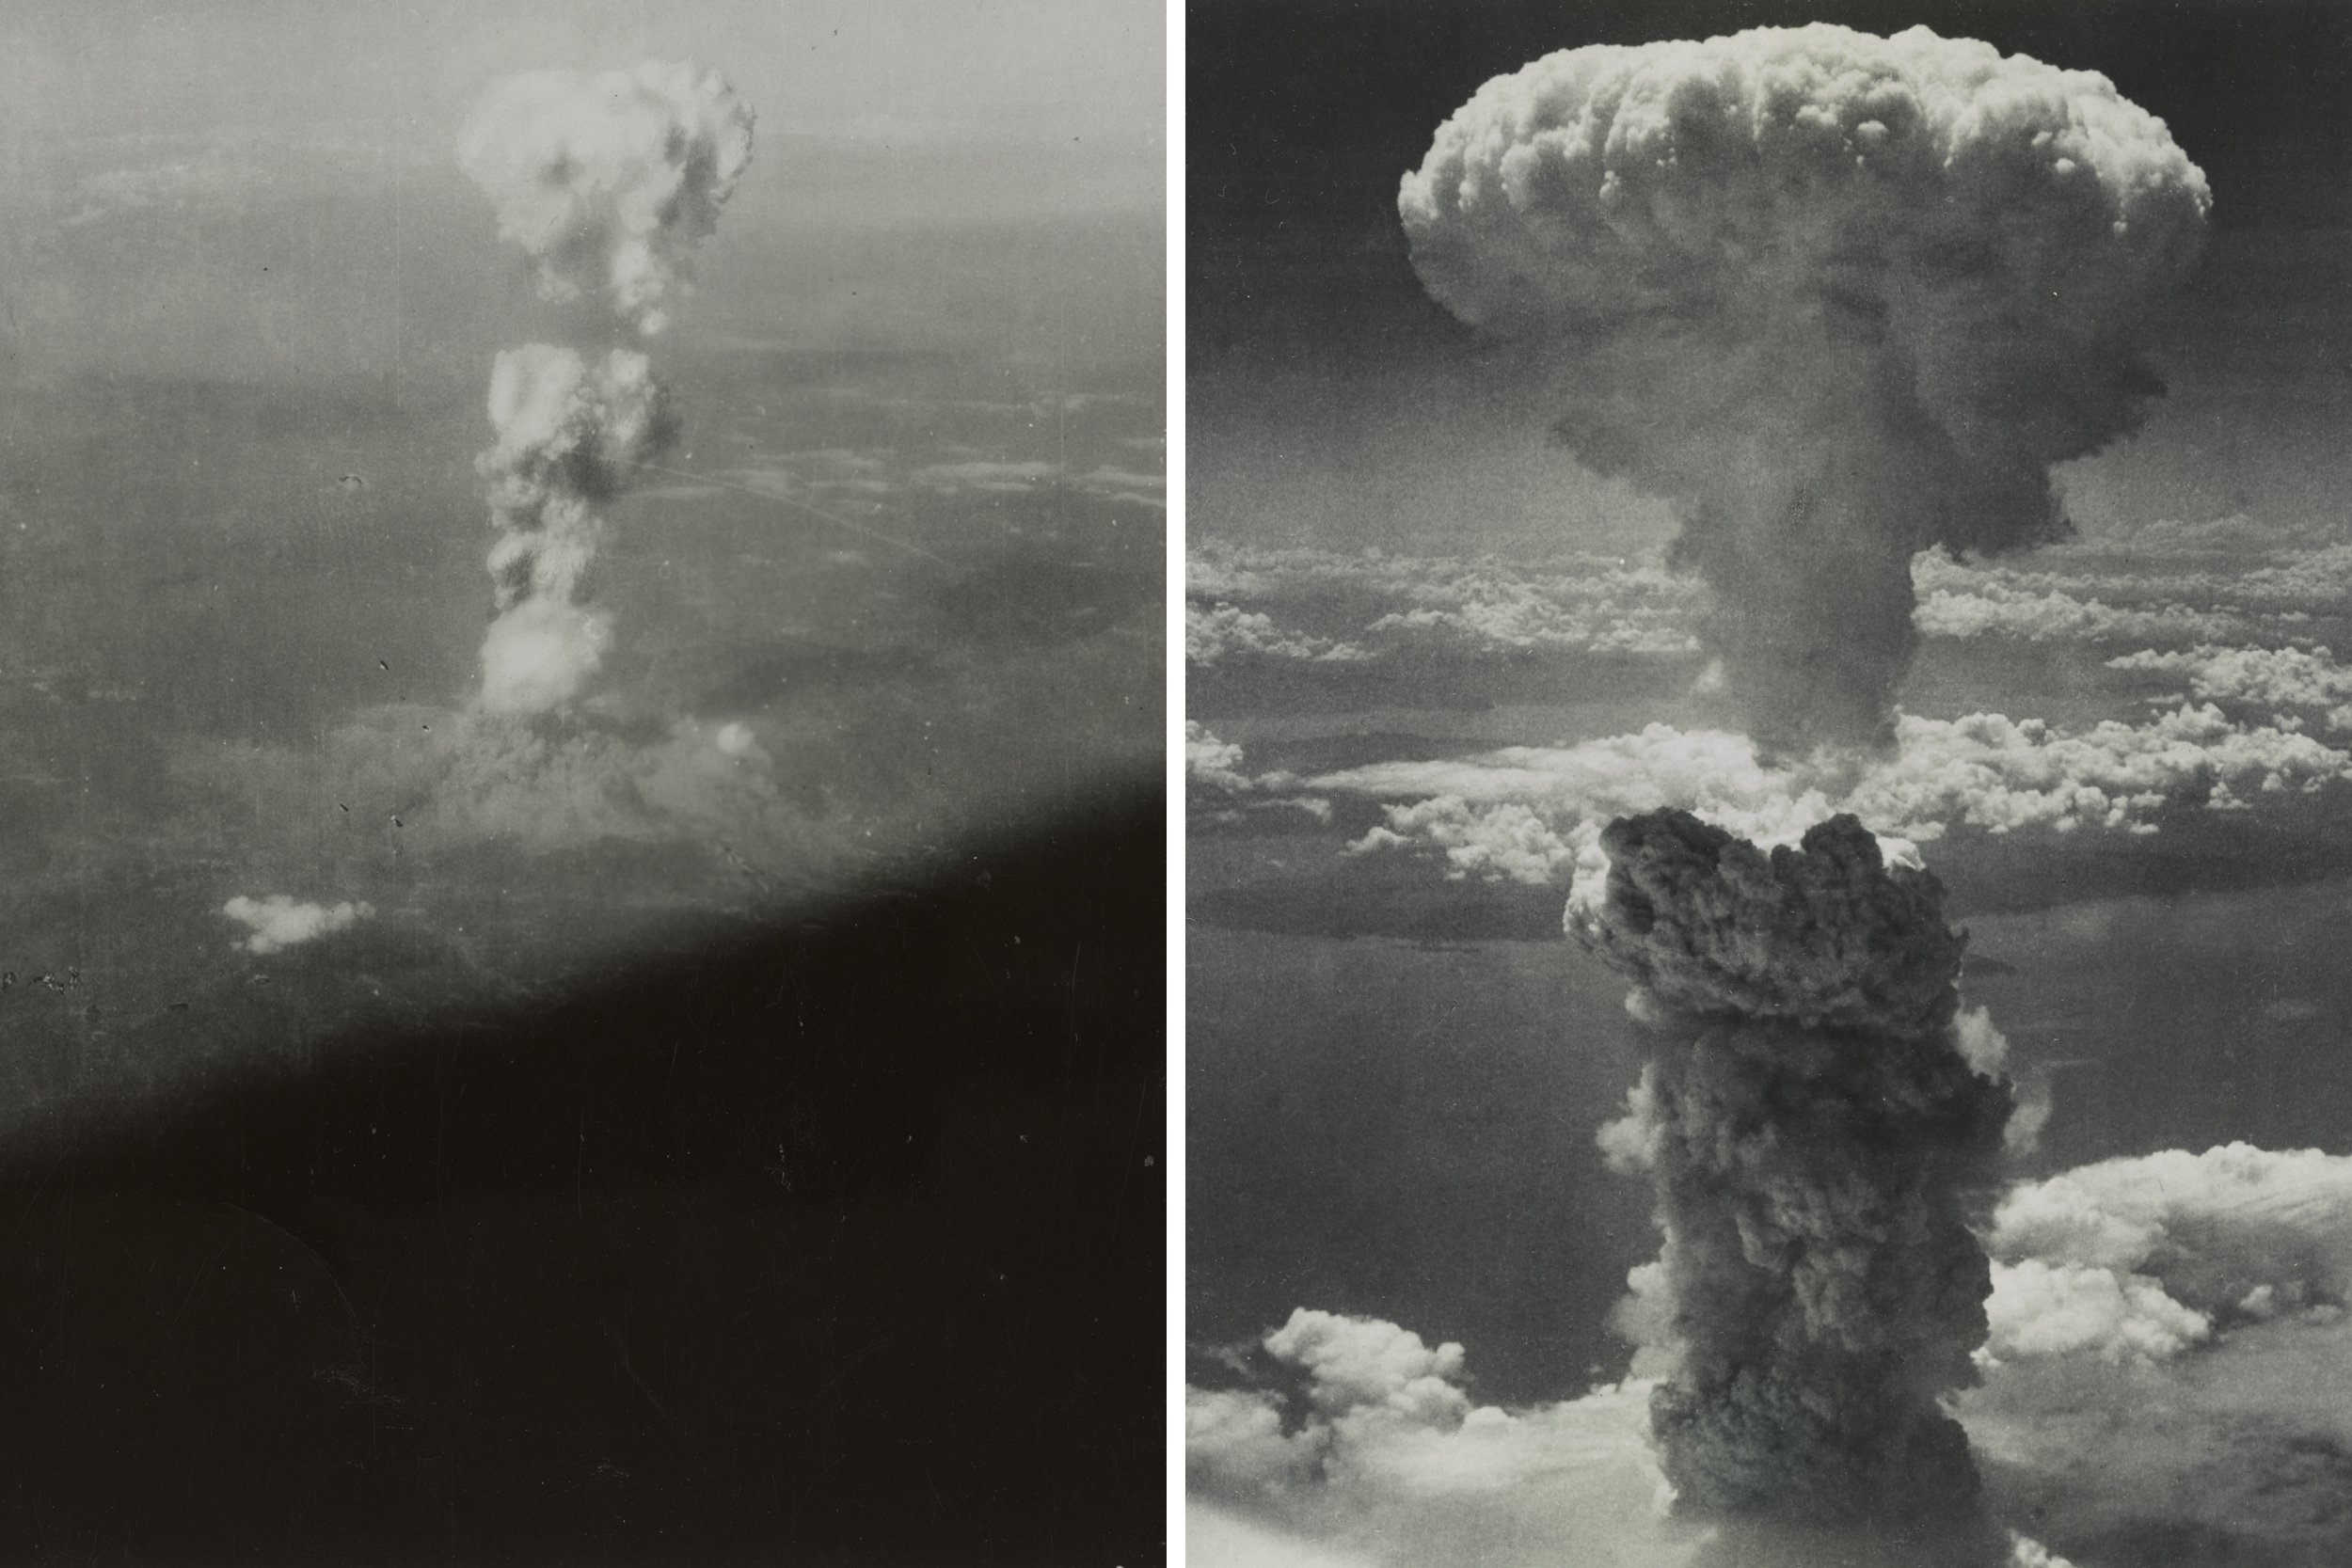 atomic bomb explosions over Hiroshima, left, and Nagasaki, right